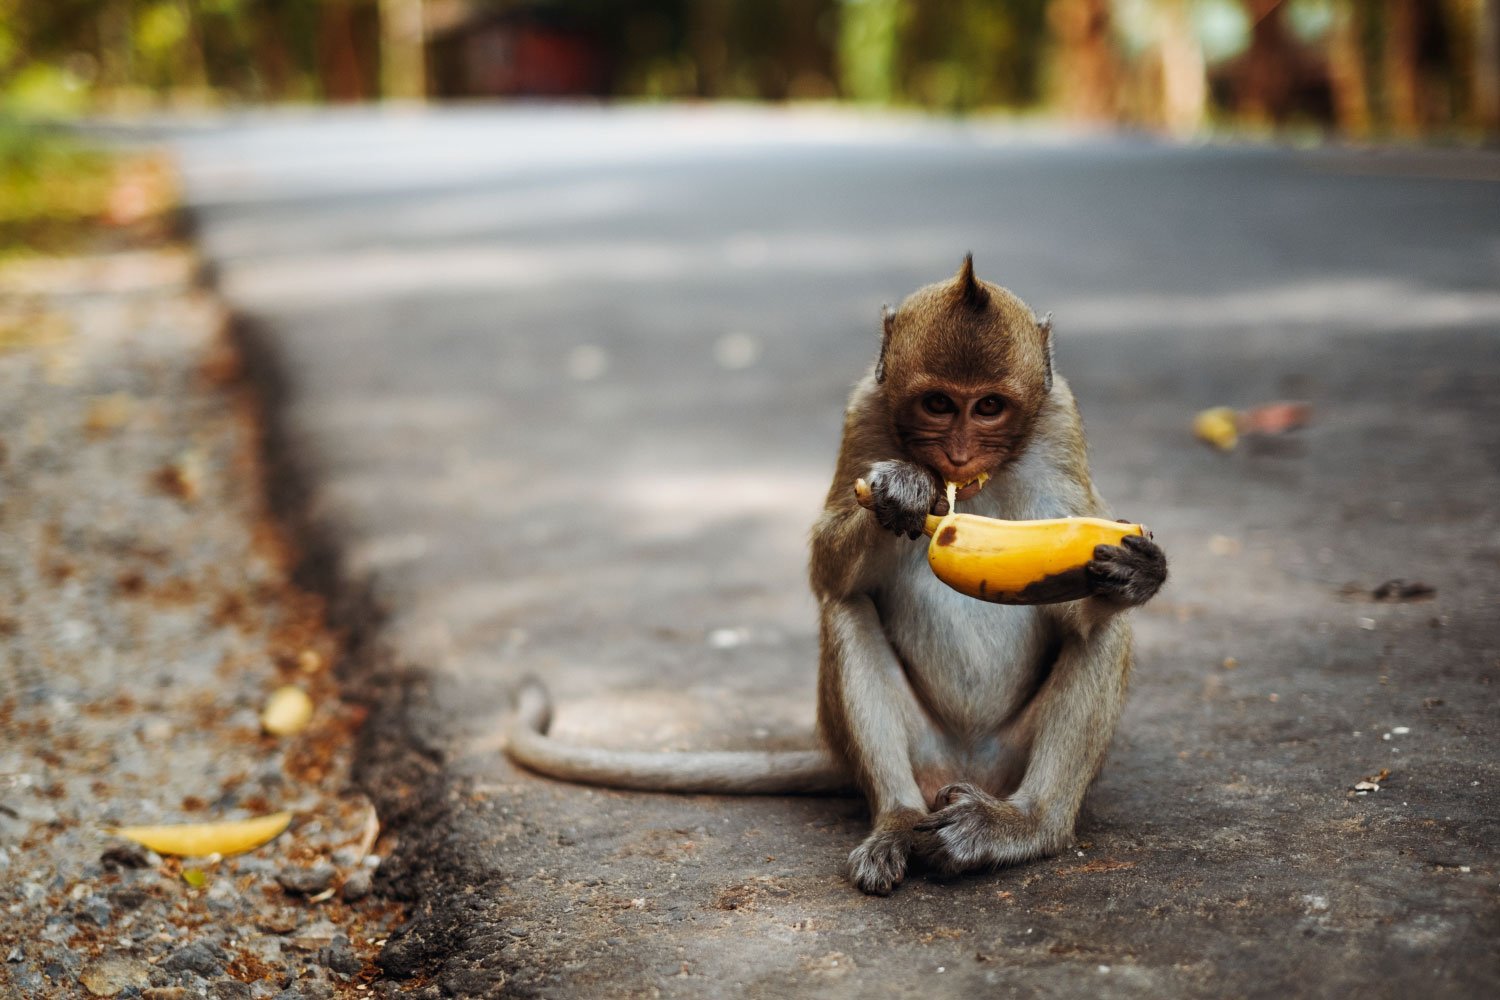 Обезьяна подавилася бананом. Обезьяна с бананом. Смешная обезьяна с бананом. Обезьяна ест банан. Obezyano s bansnom.